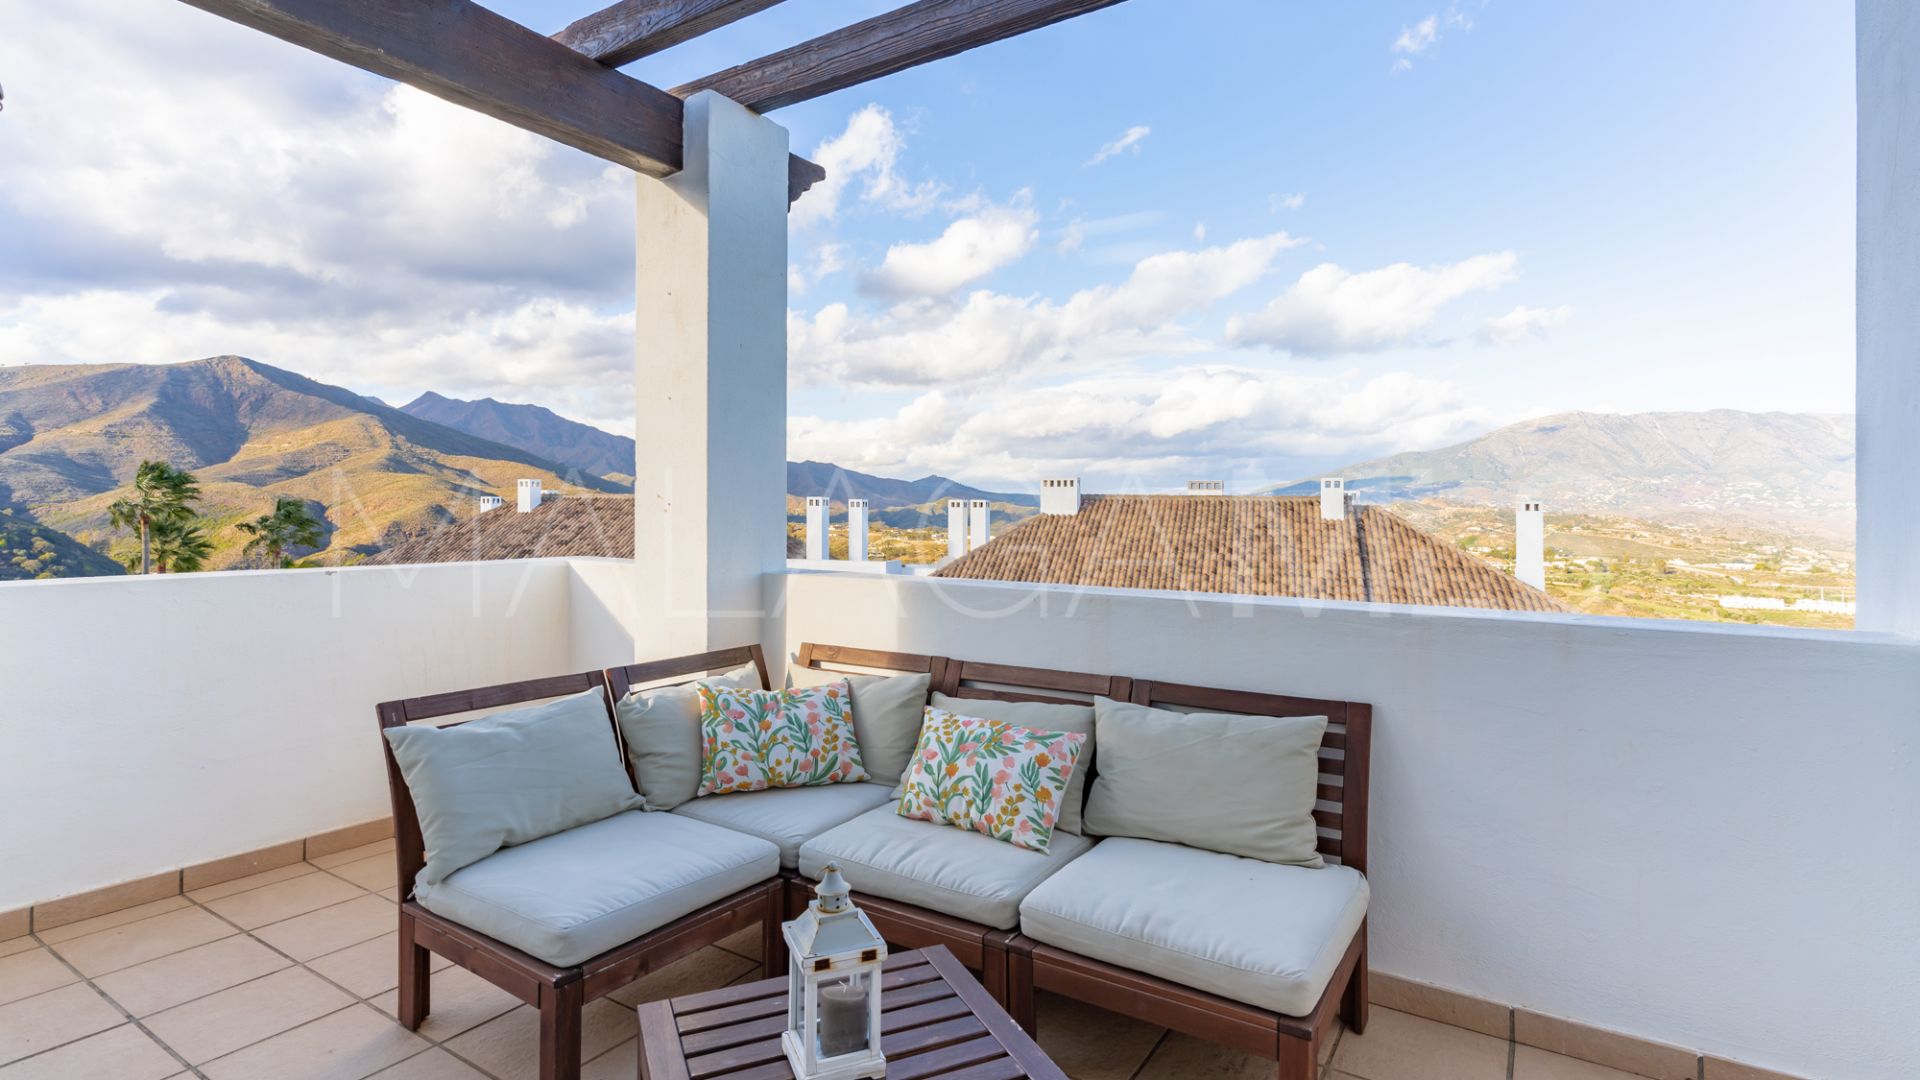 Adosado with 3 bedrooms for sale in La Cala Golf Resort